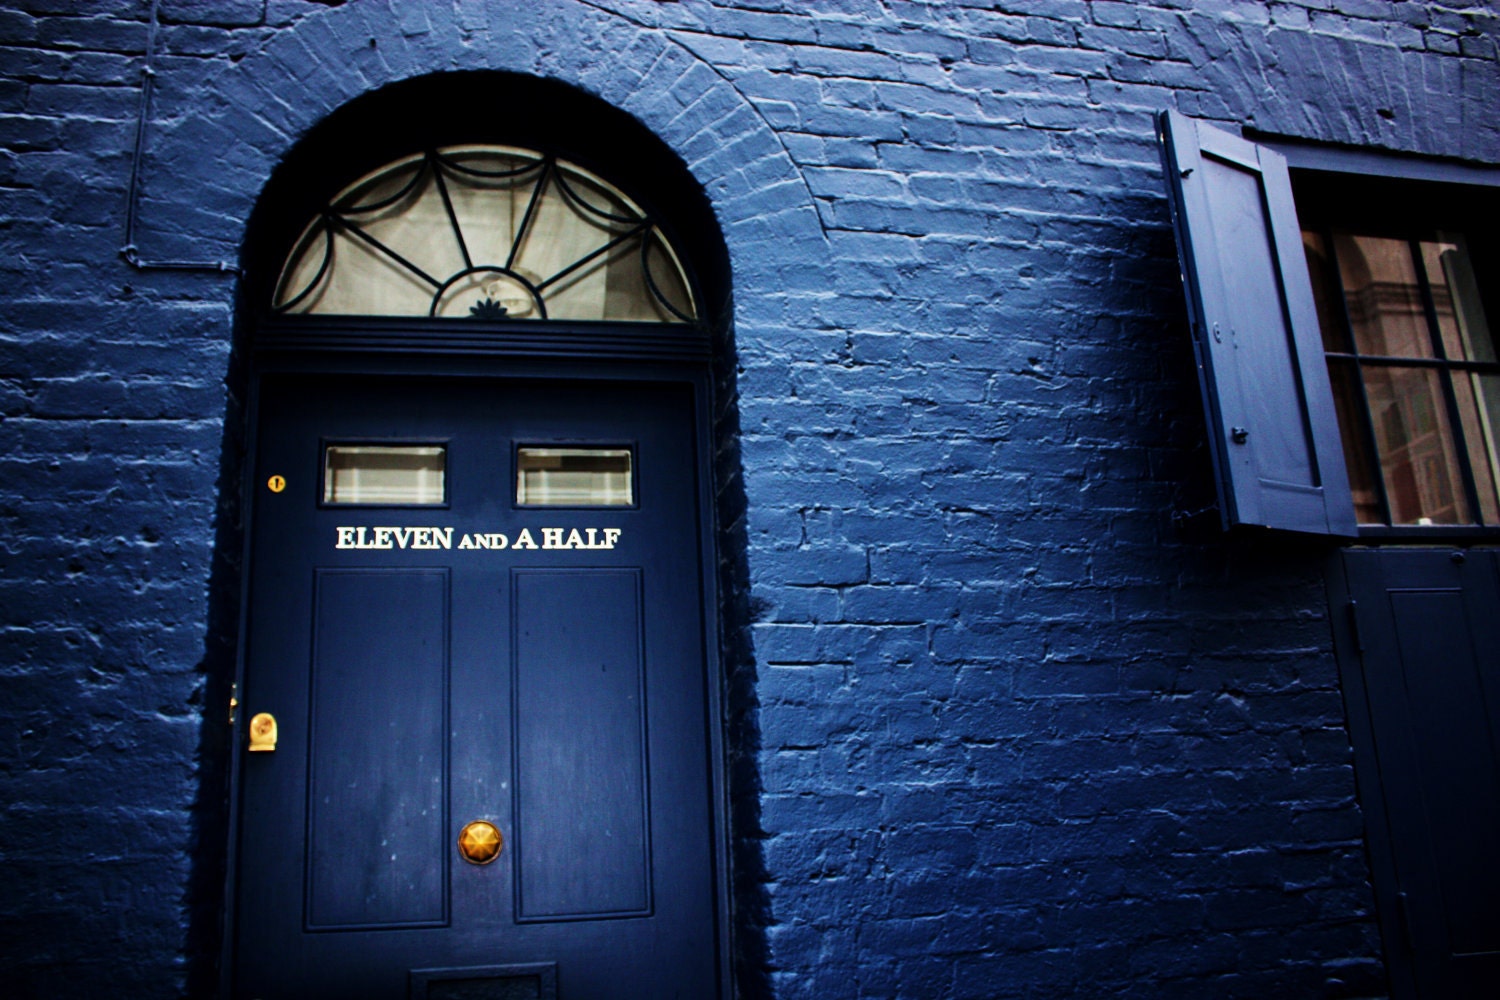 London Travel Photography: Blue Door - Eleven and a Half, London, England - 8x10 Print - PhotoLarks